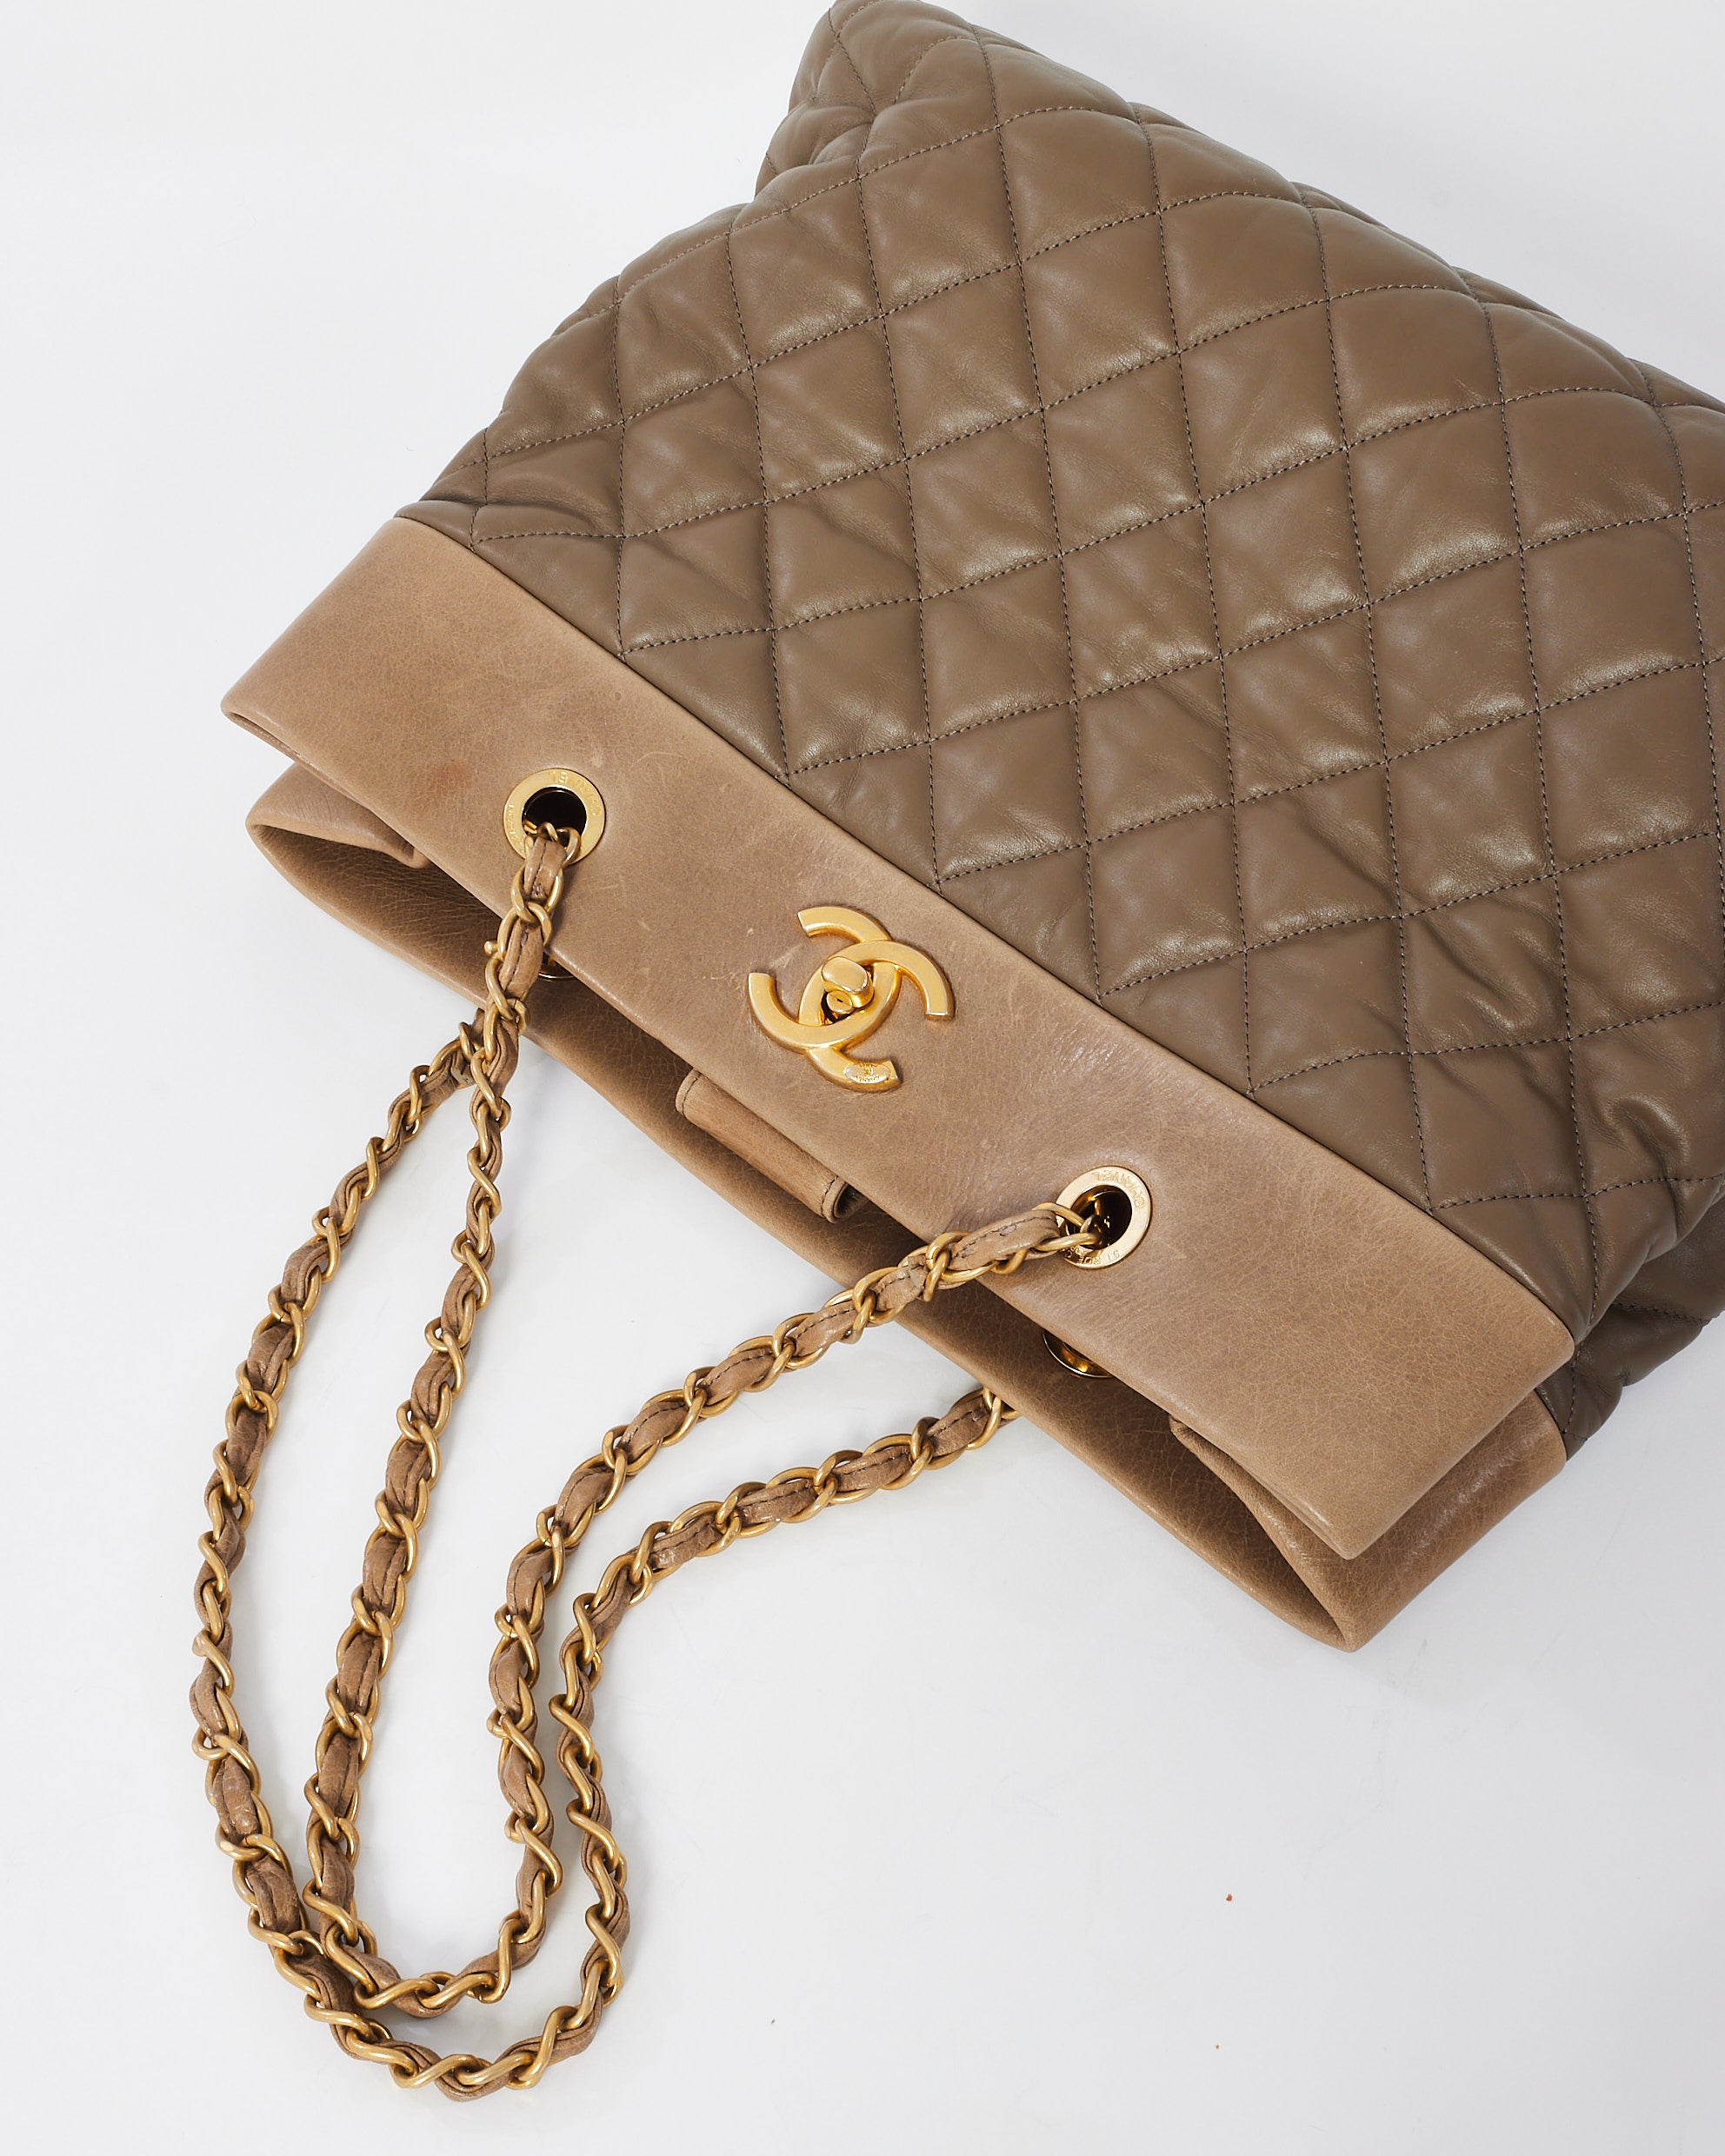 Small Flap Bag, calfskin & gold-tone metal, black & brown - CHANEL | Chanel  flap bag, Bags, Fashion handbags